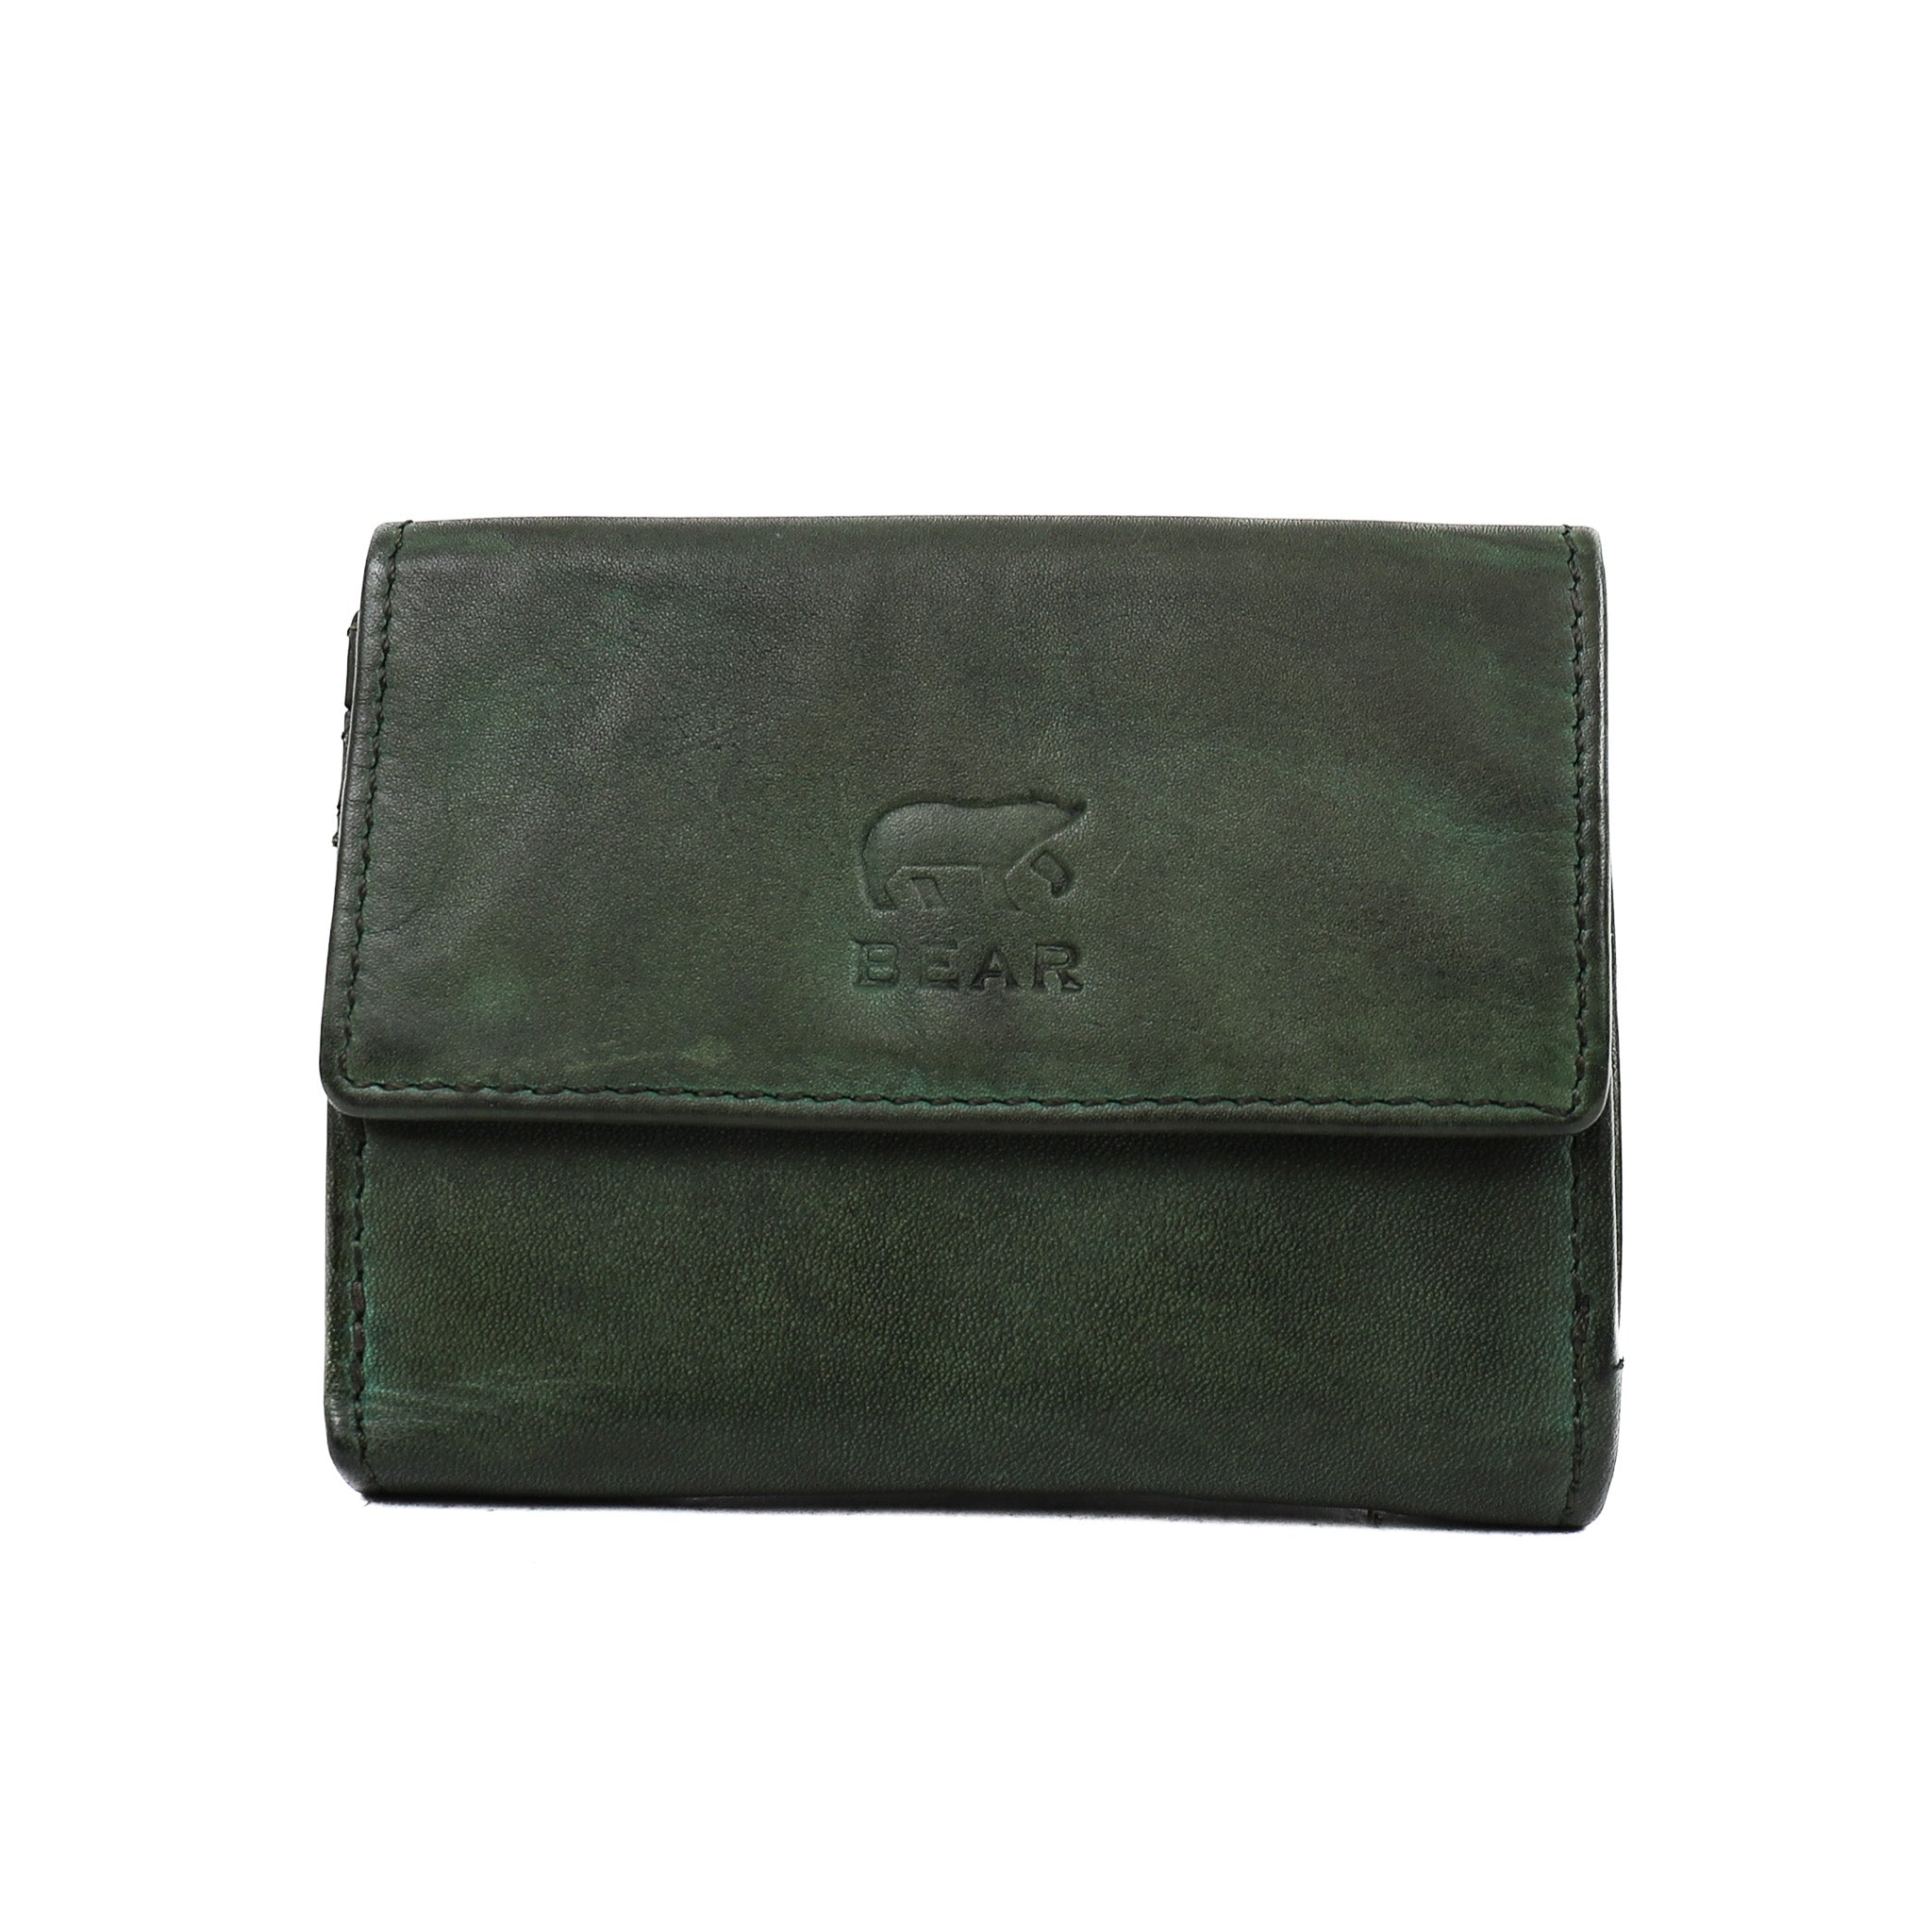 Wallet 'Jolie' green - CL 14618